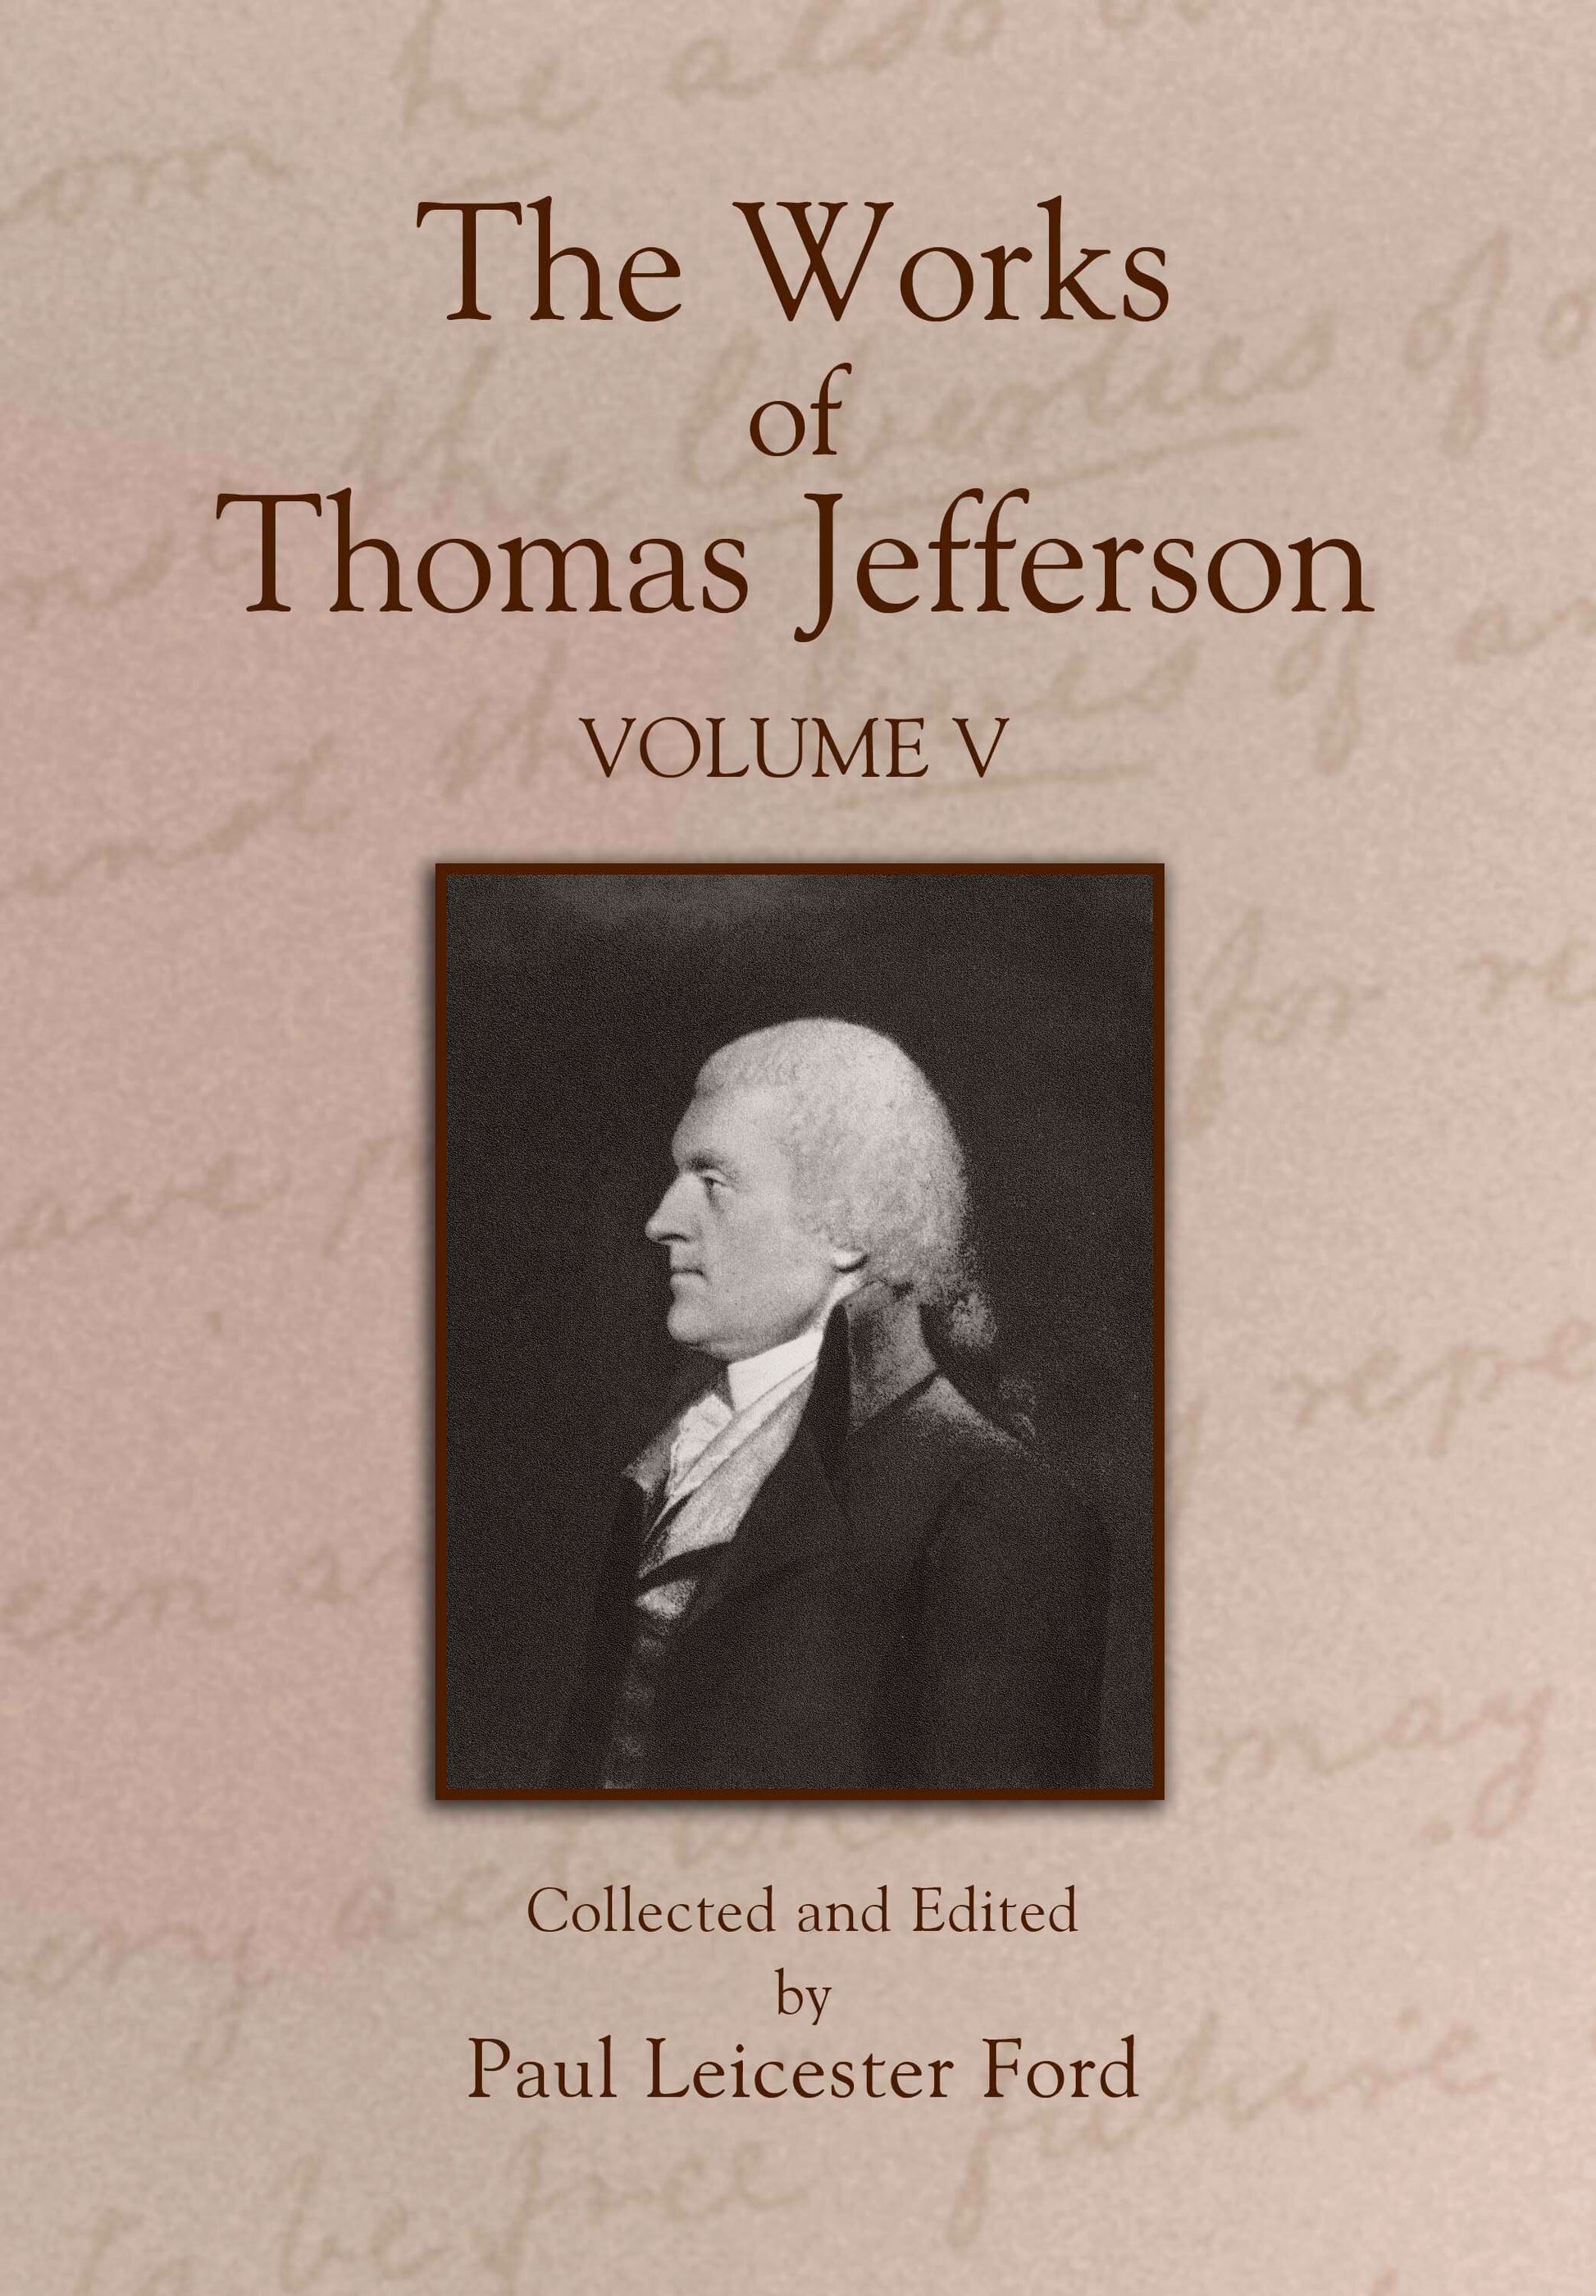 The Works of Thomas Jefferson: Volume V